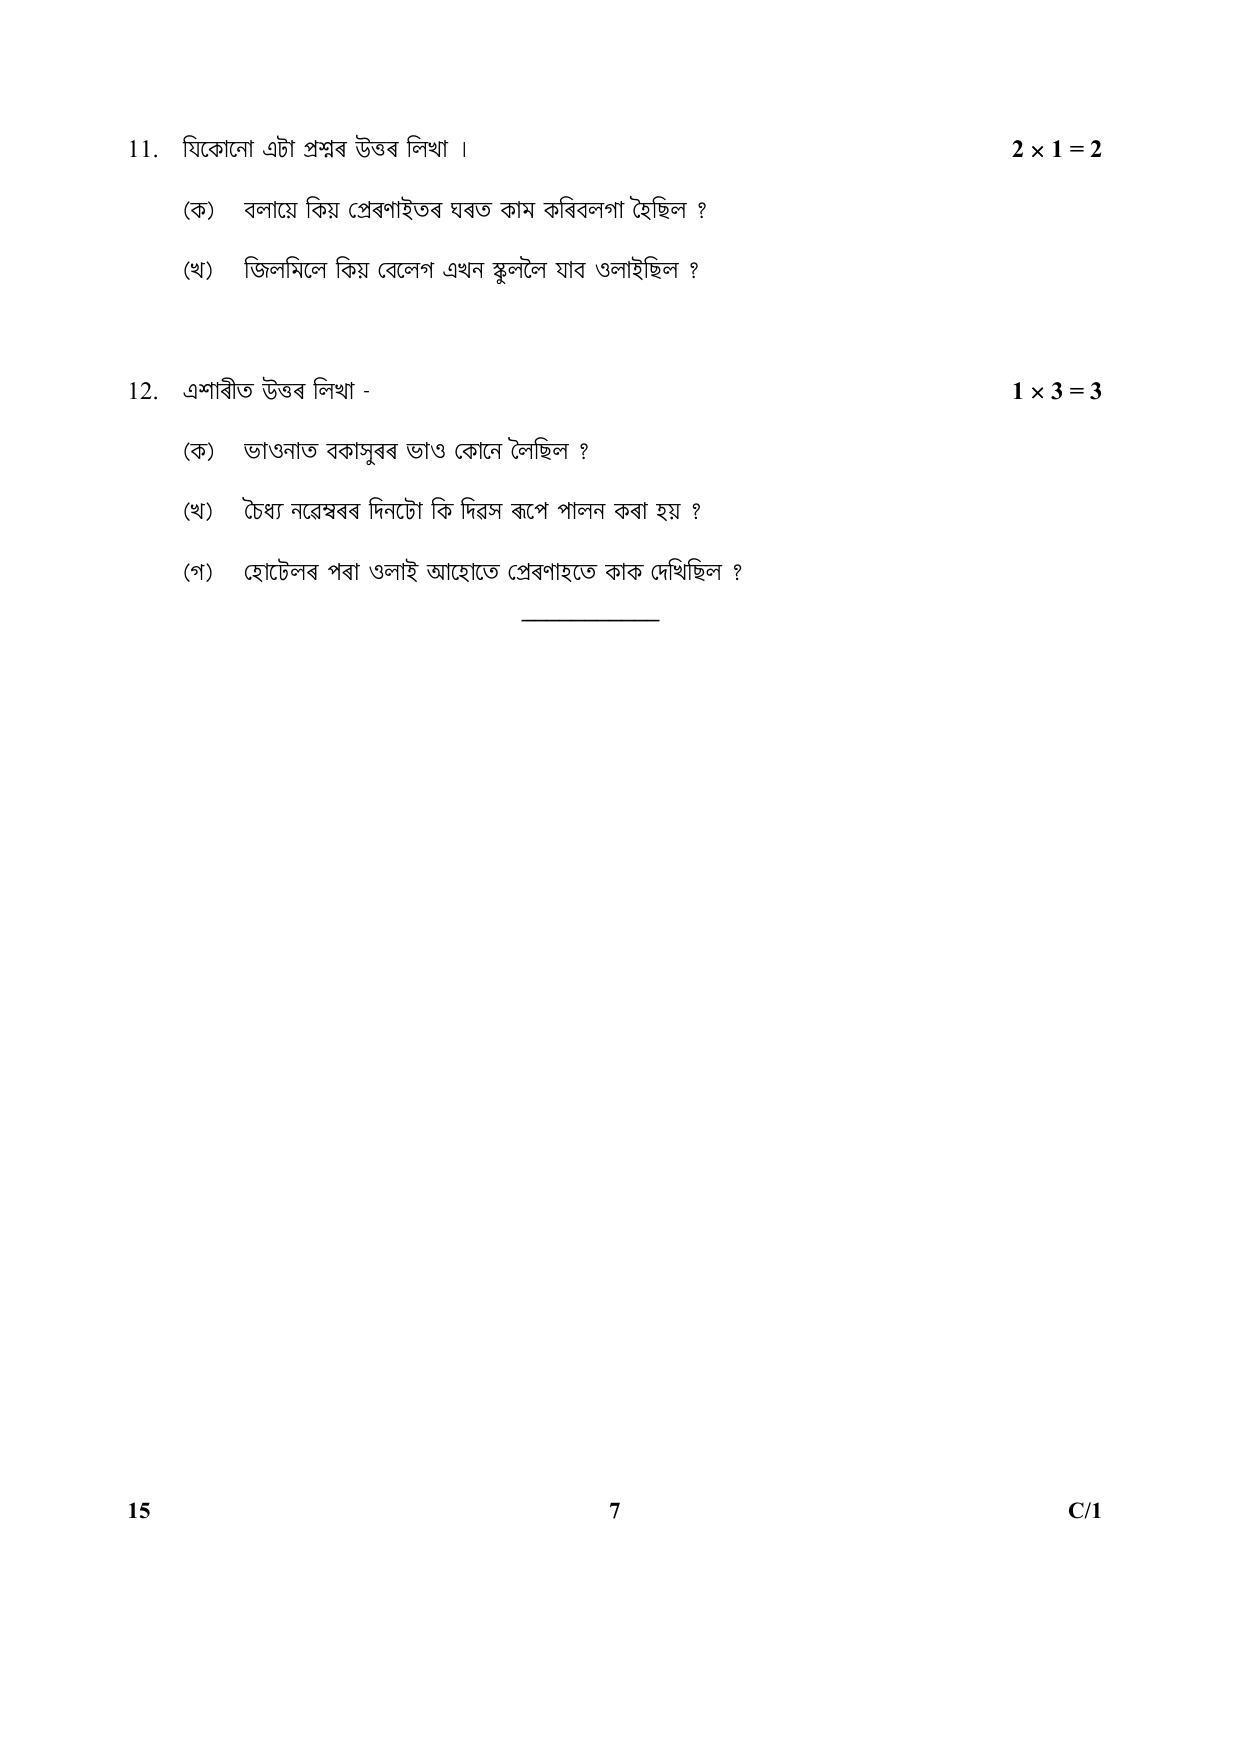 CBSE Class 10 15 (Assamese) 2018 Compartment Question Paper - Page 7